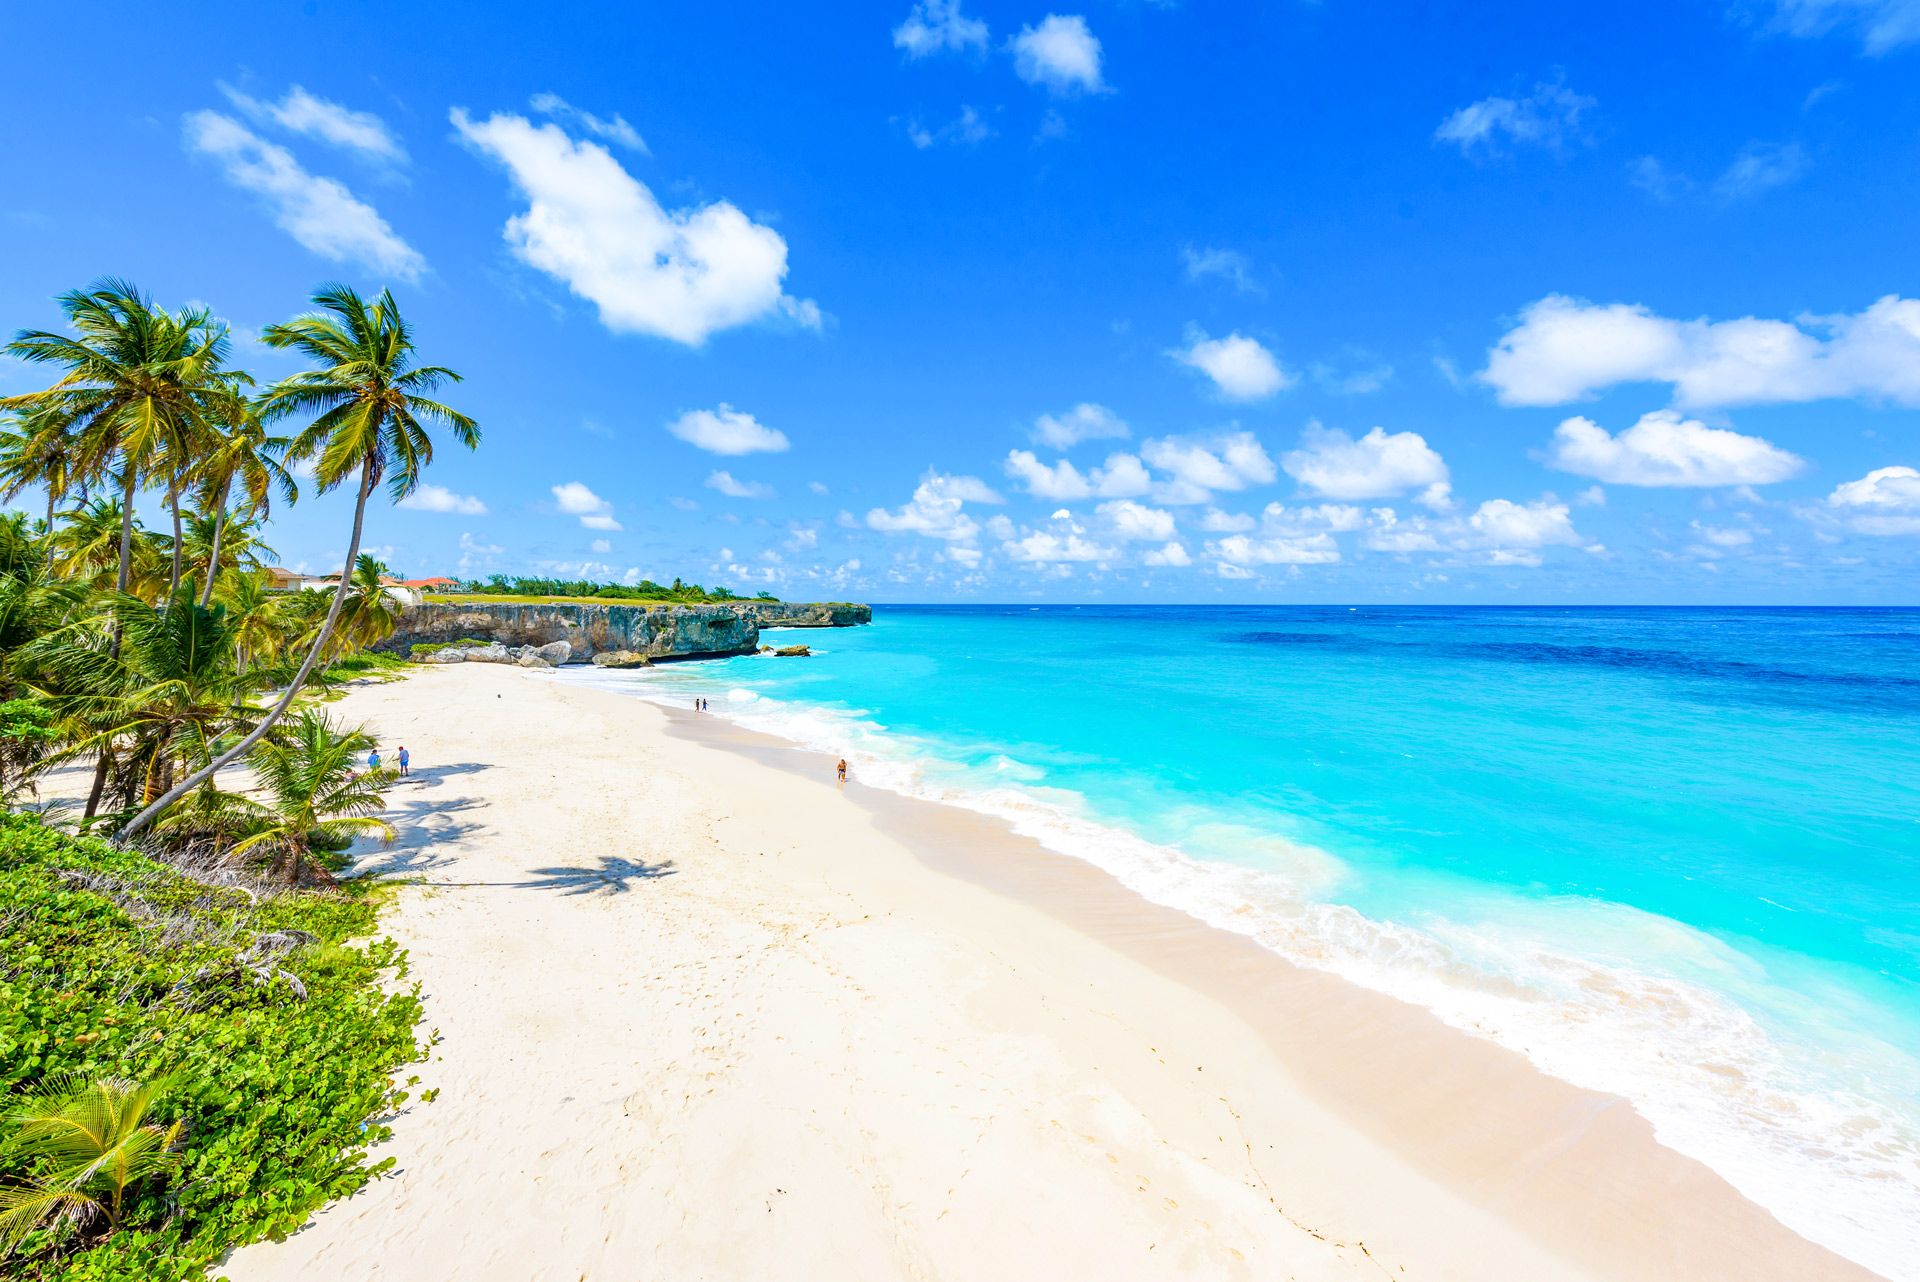 13 Best Things to Do in Bridgetown, Barbados